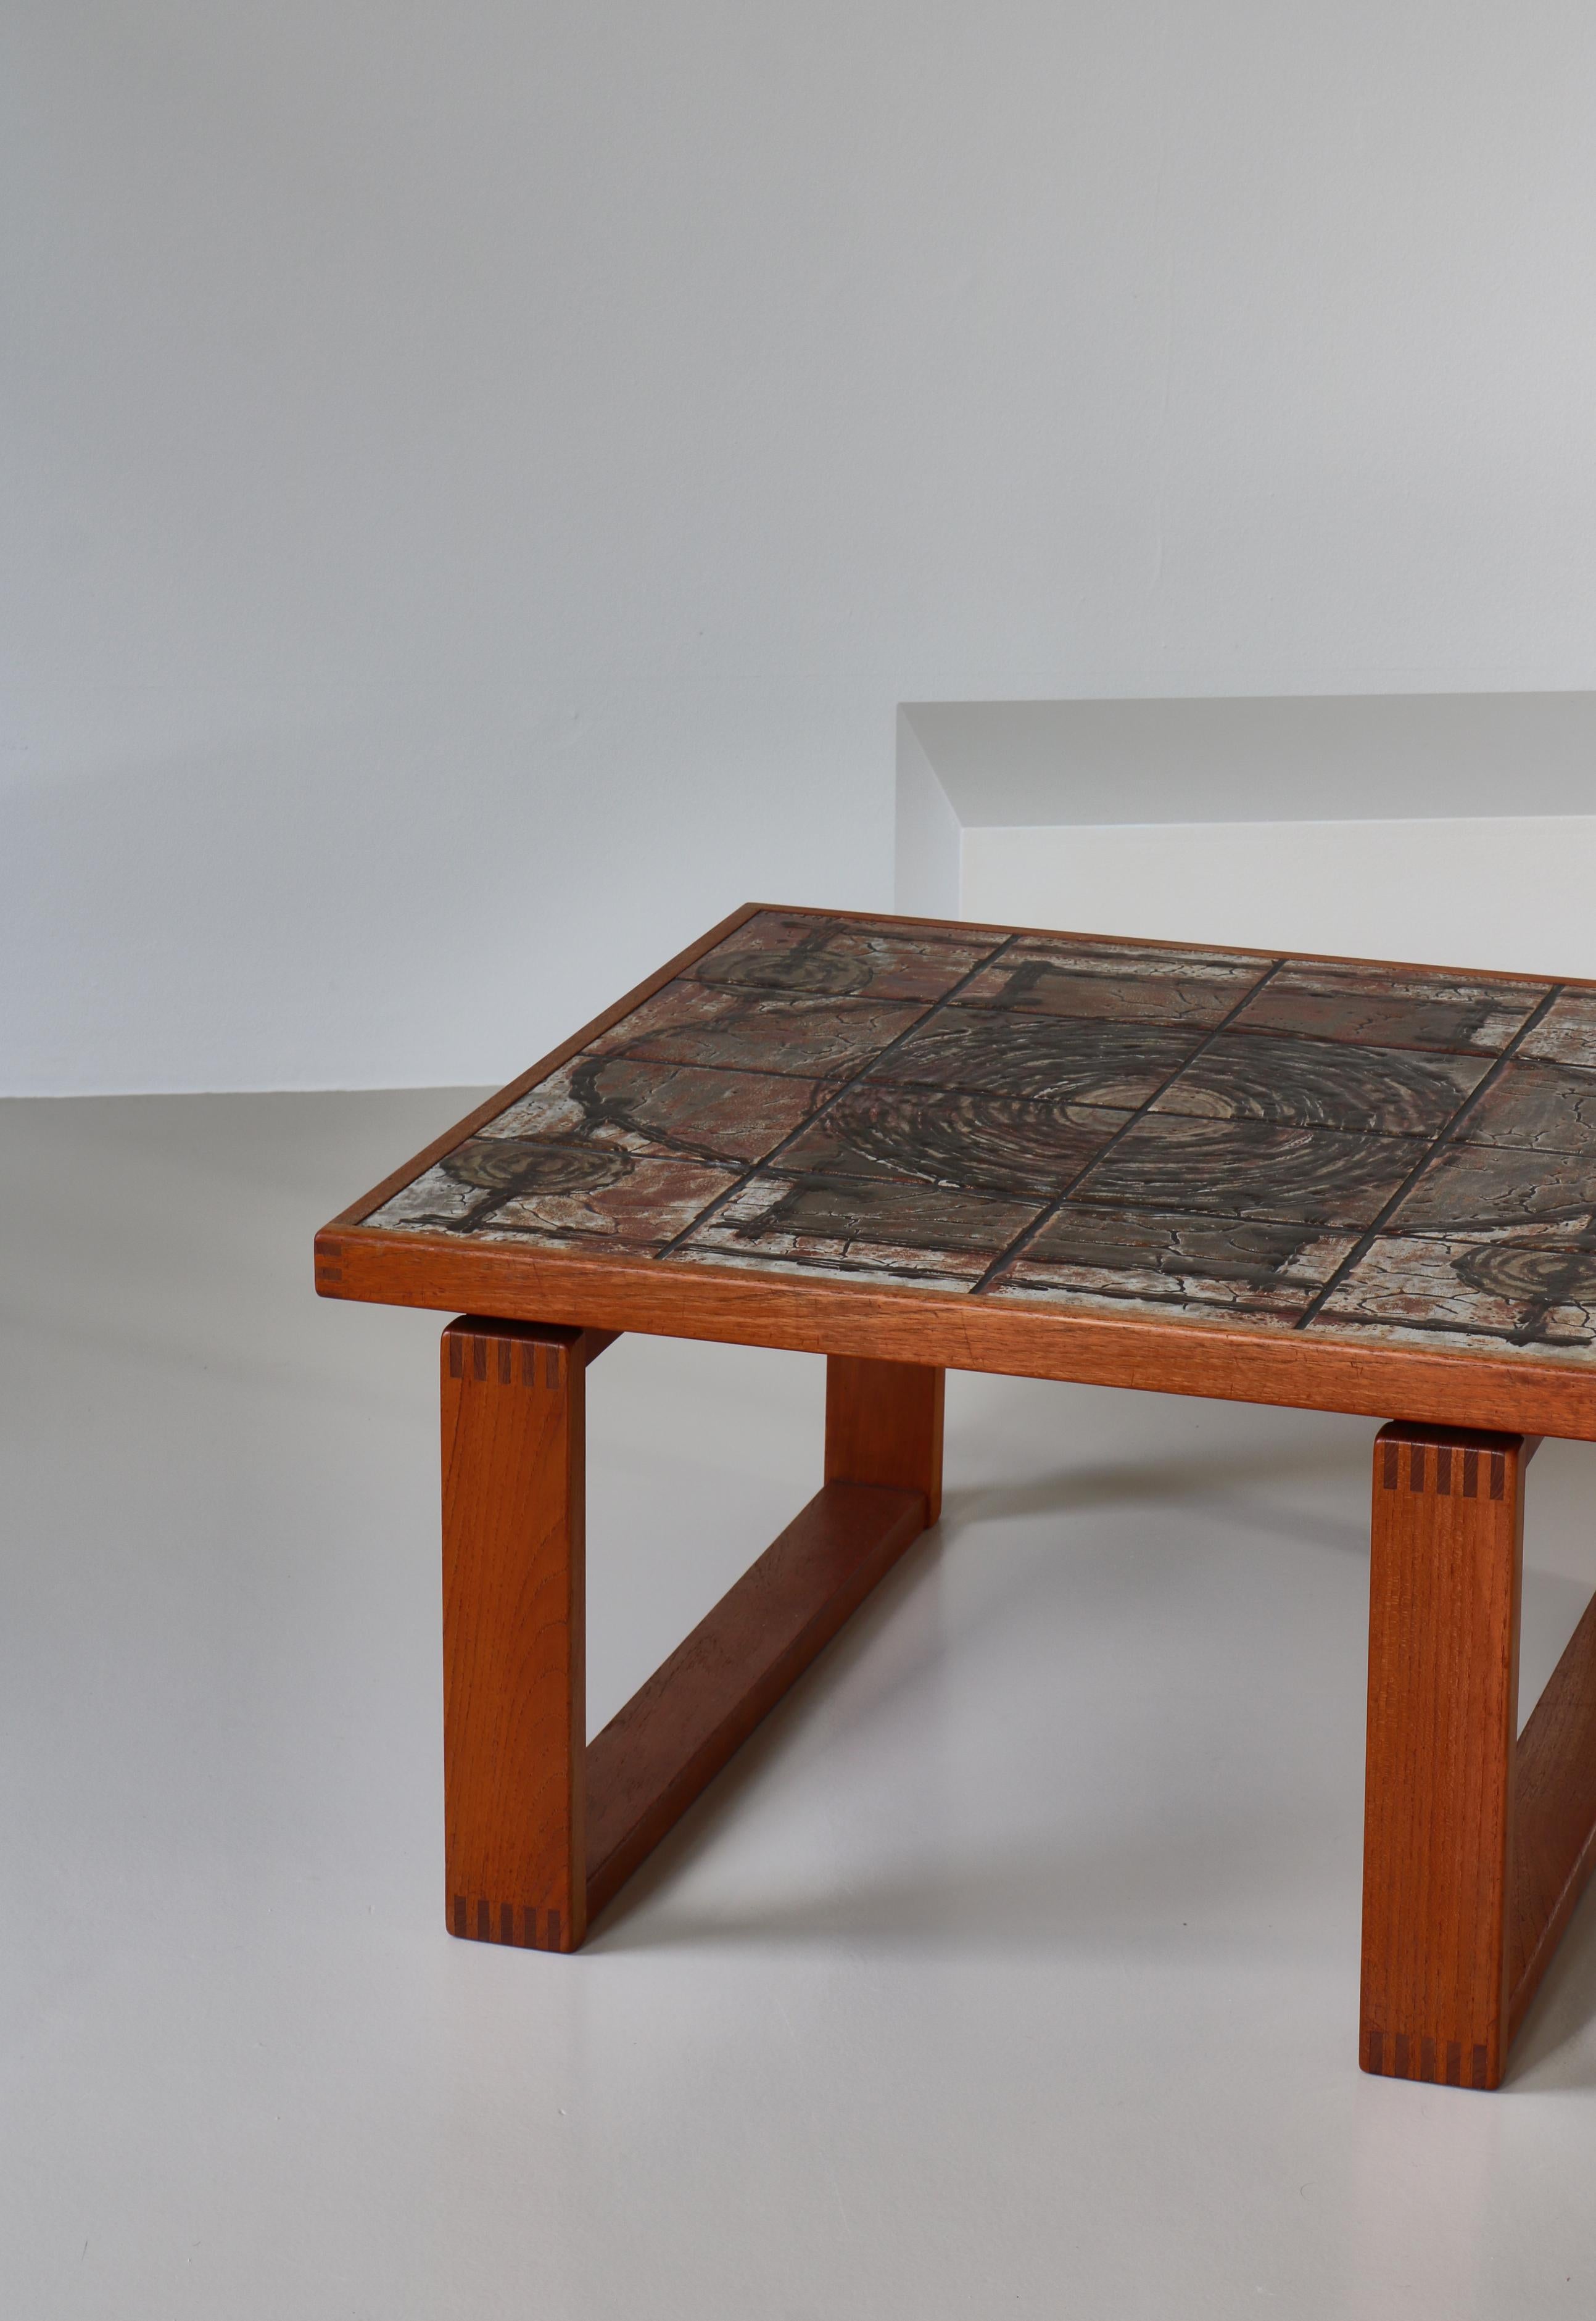 Danish Modern Center Table in Solid Teakwood & Ceramic Tiles by Ox-Art, 1973 For Sale 6